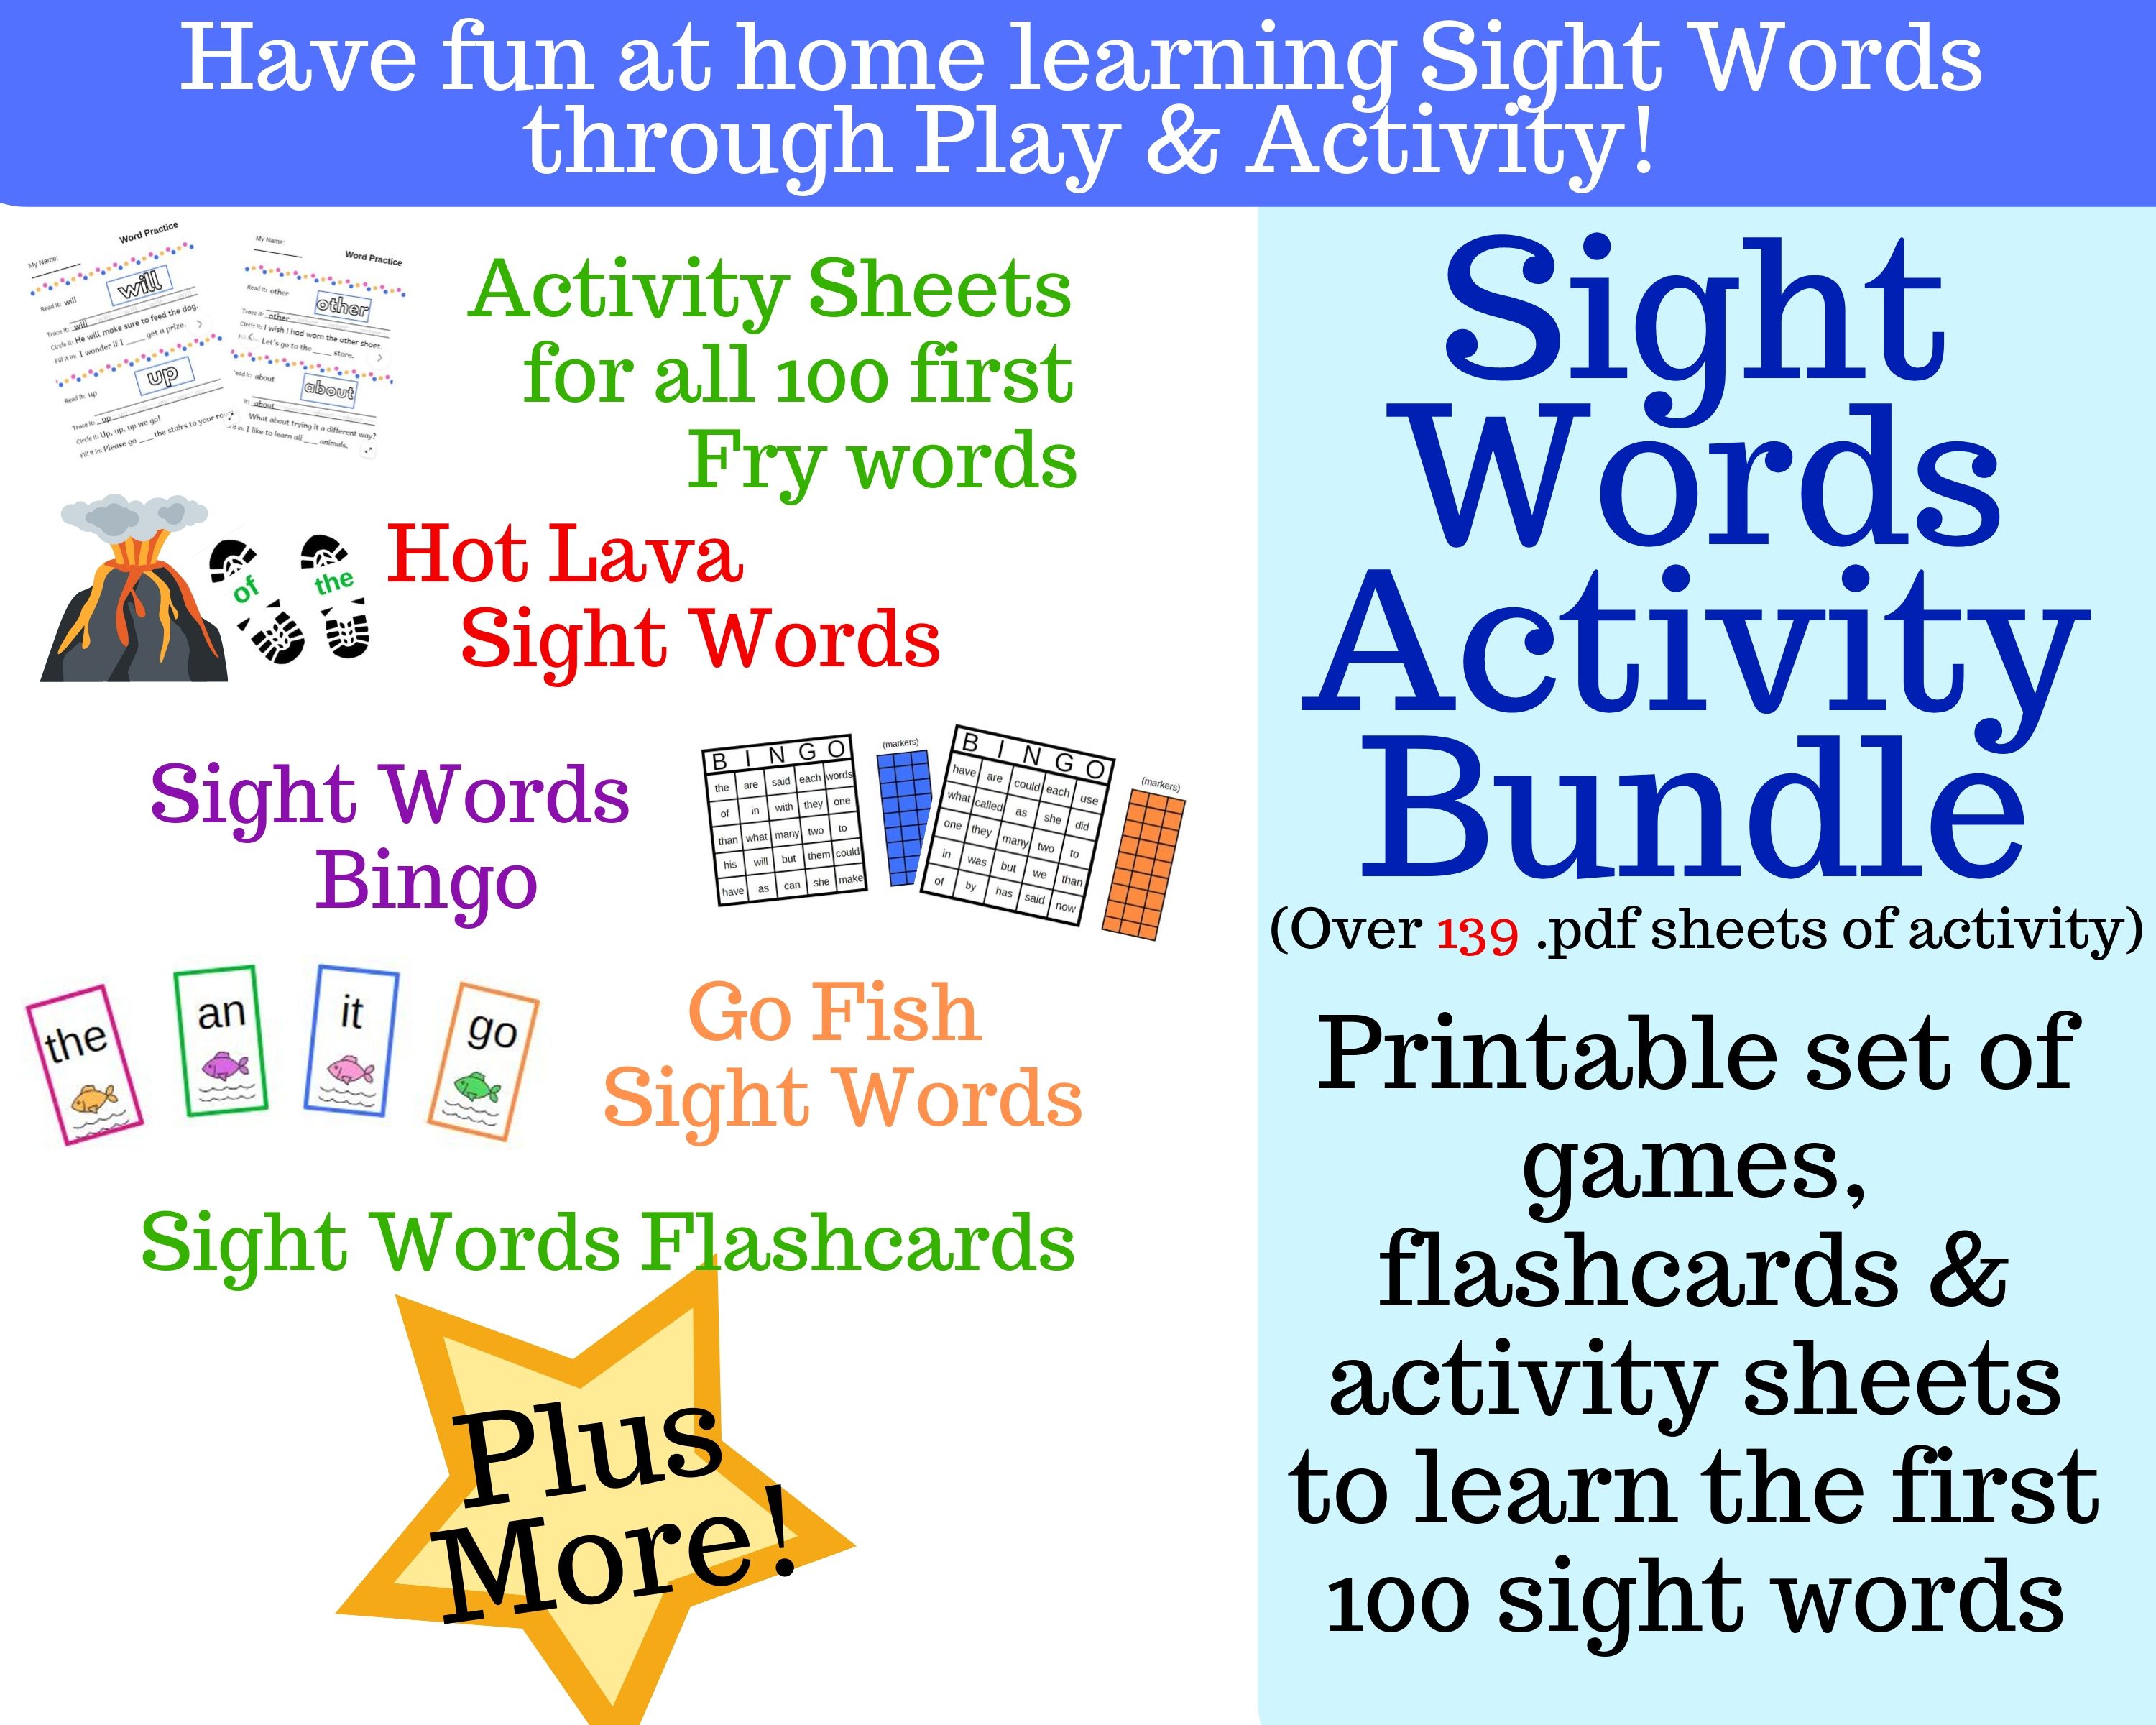 Sight Words Activity Bundle